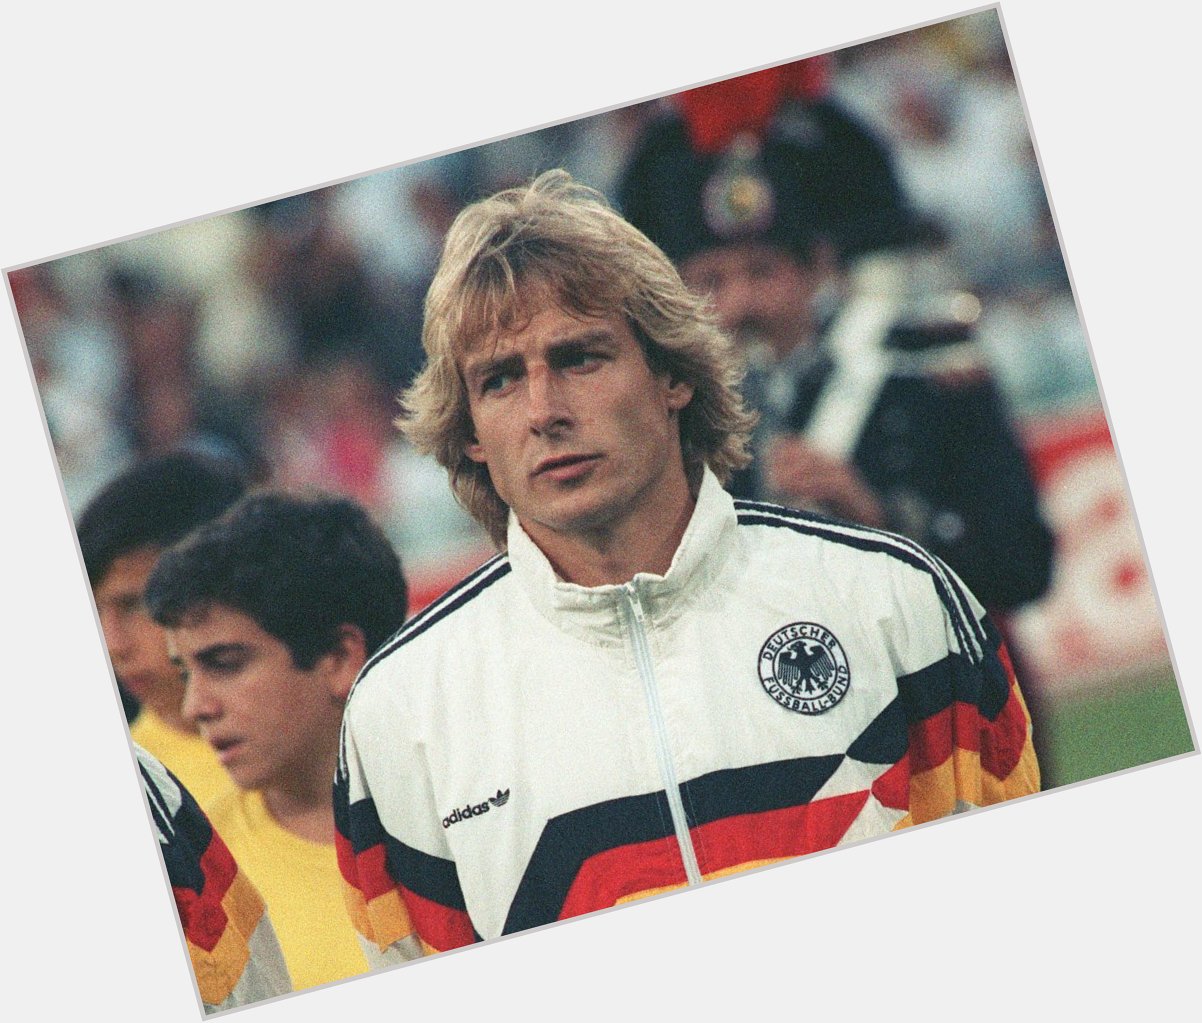 Happy birthday to Germany legend Jurgen Klinsmann, who turns 53 today! 